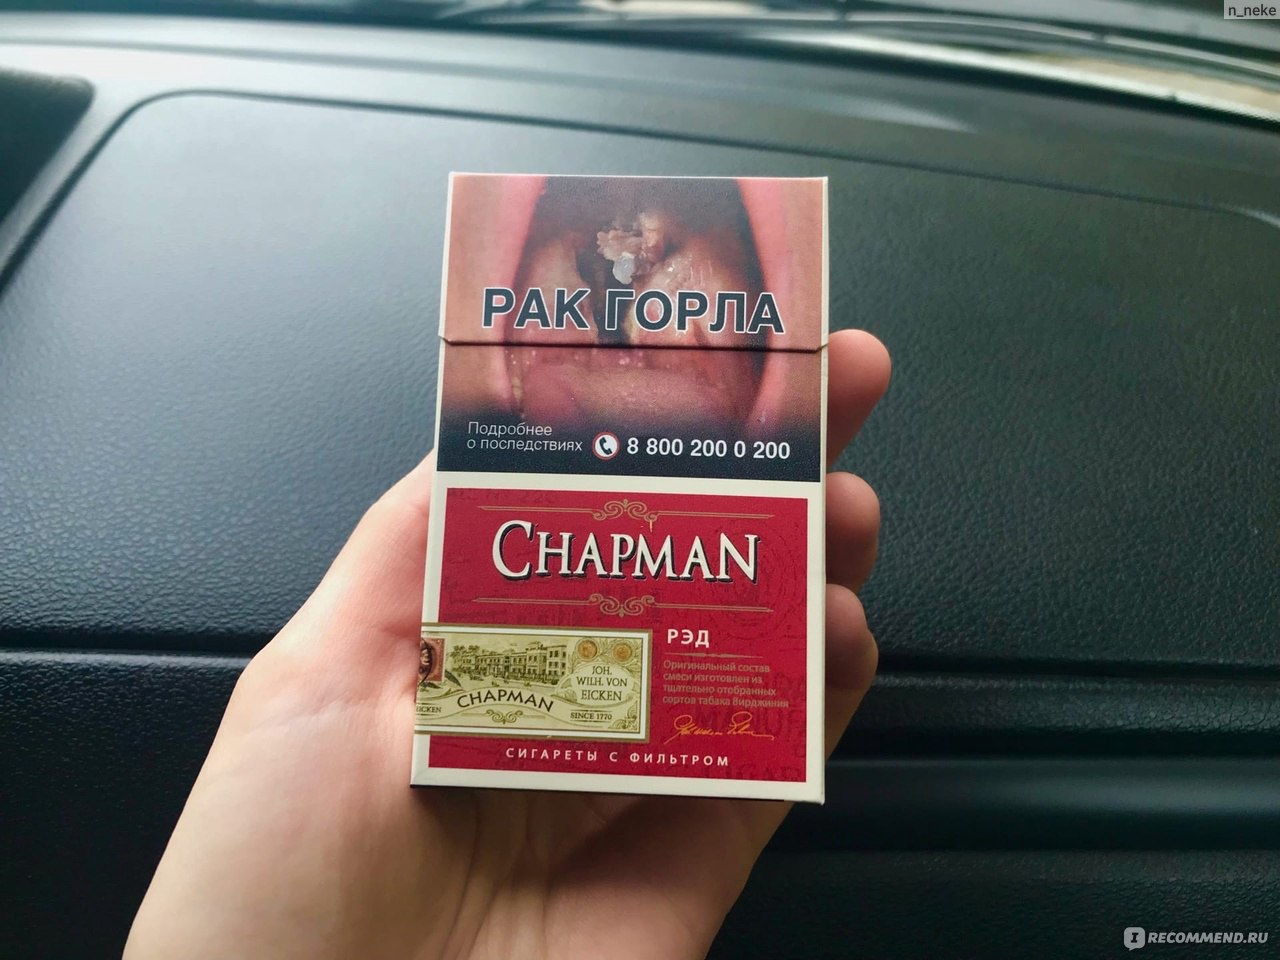 Сигареты чапман вишня цена. Сигареты Chapman Red. Chapman сигареты вишня. Сигареты Chapman Red тонкие. Сигареты Chapman Red вишня.